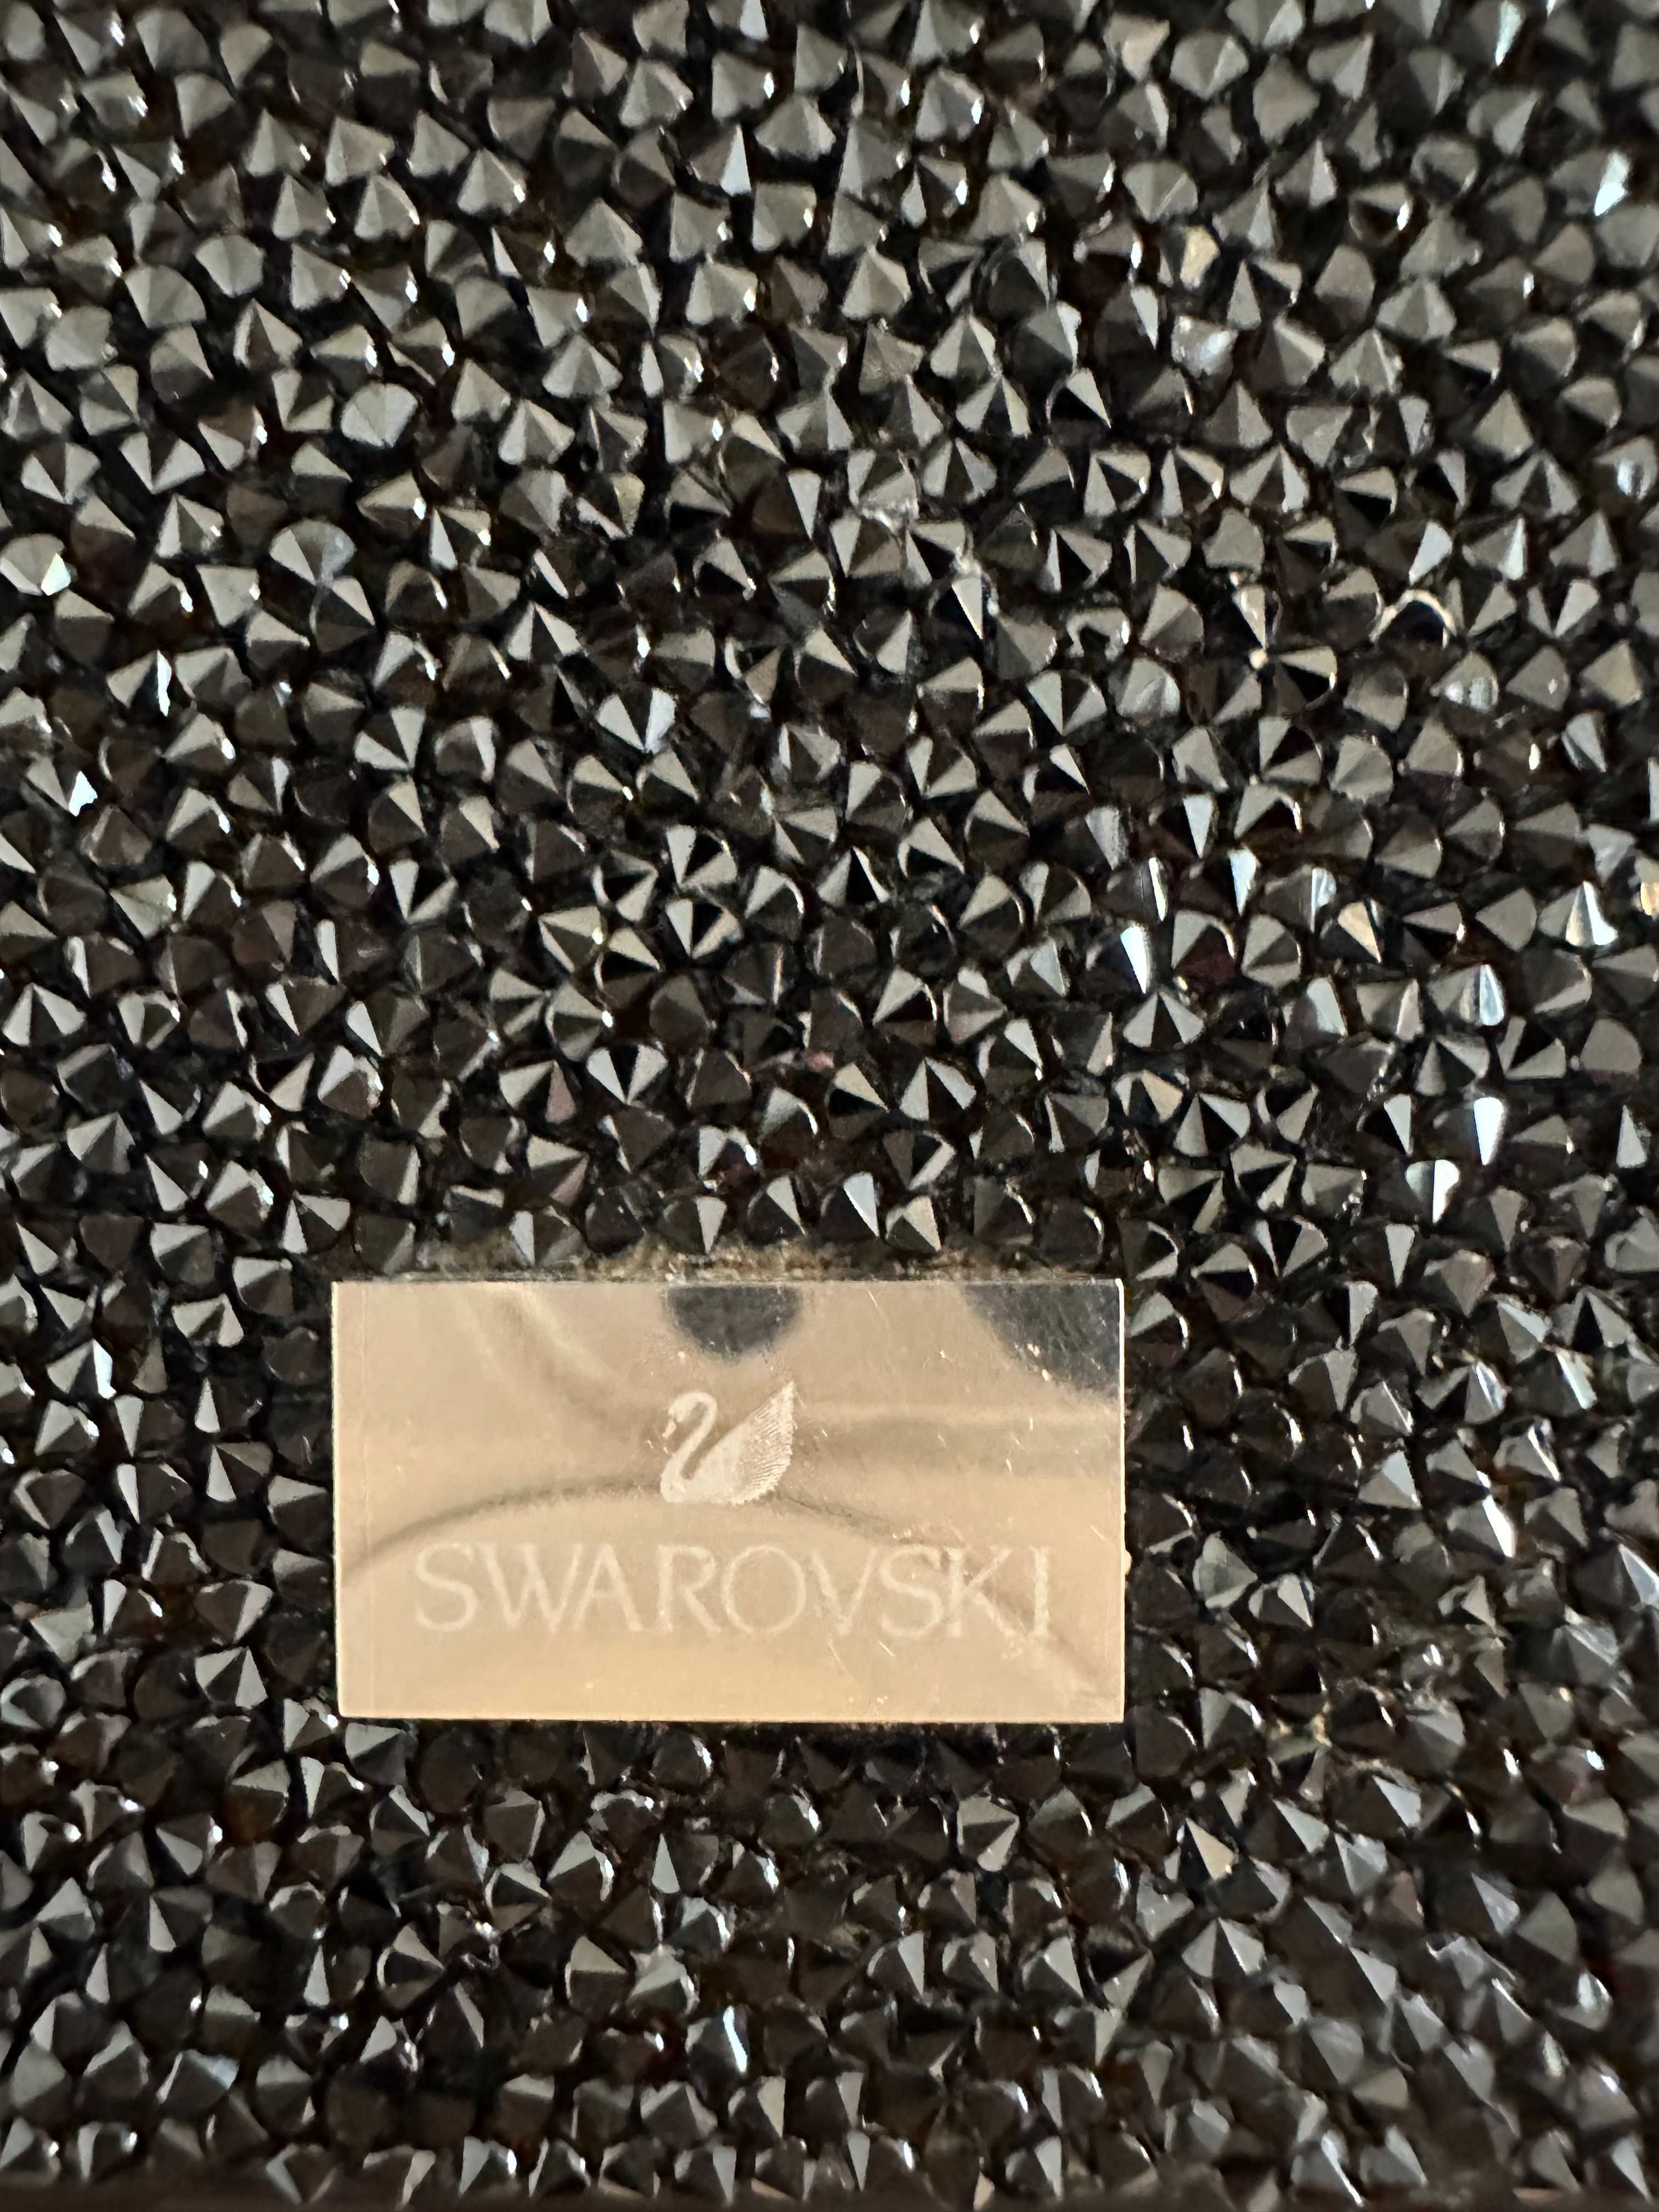 Swarovski smartphone case за iPhone 10 xs max